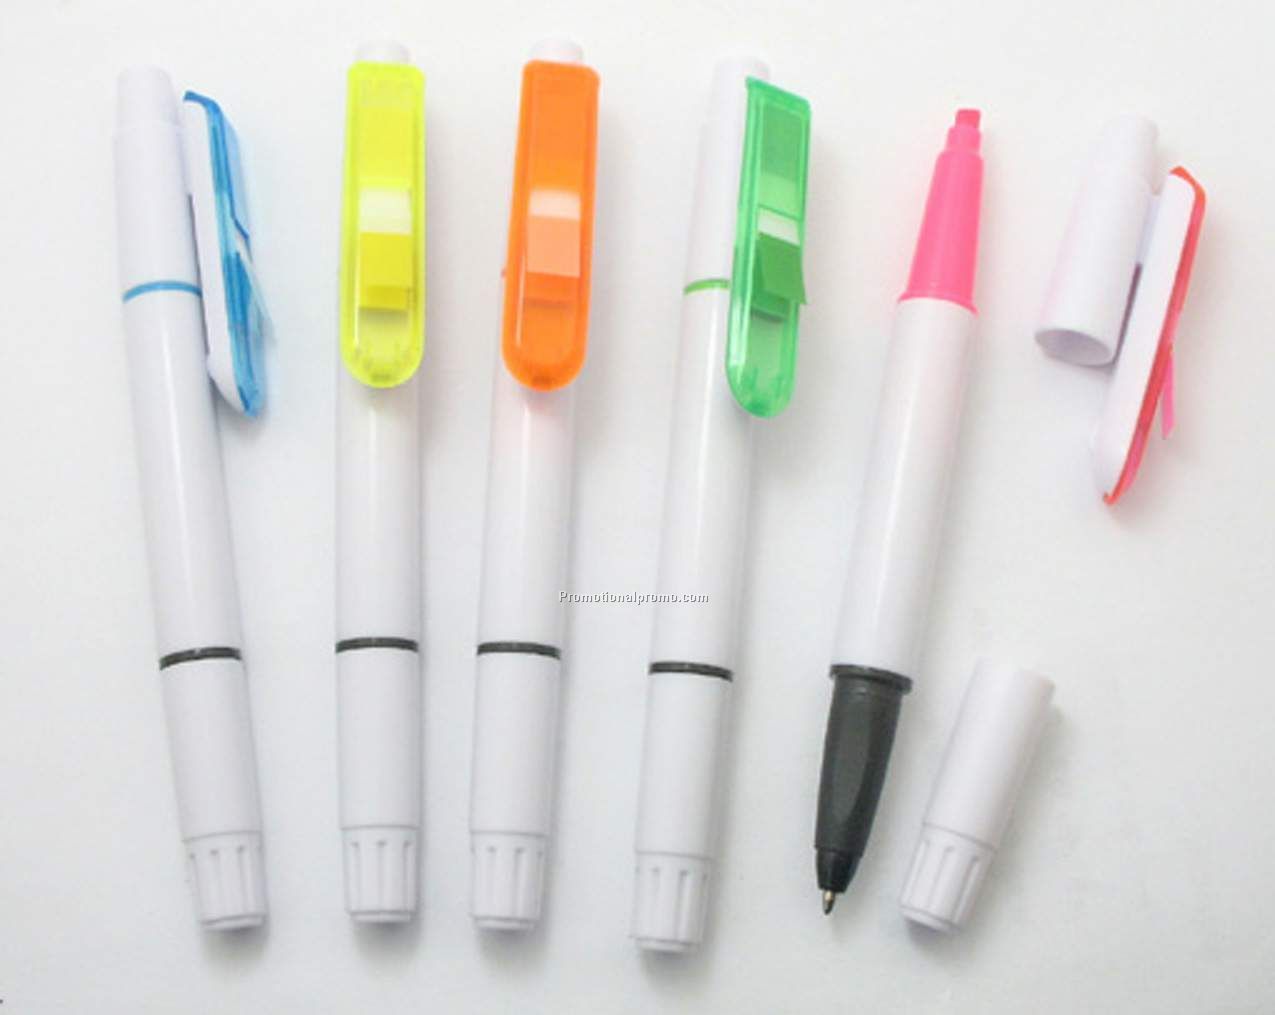 Highlighter and ballpoint pen